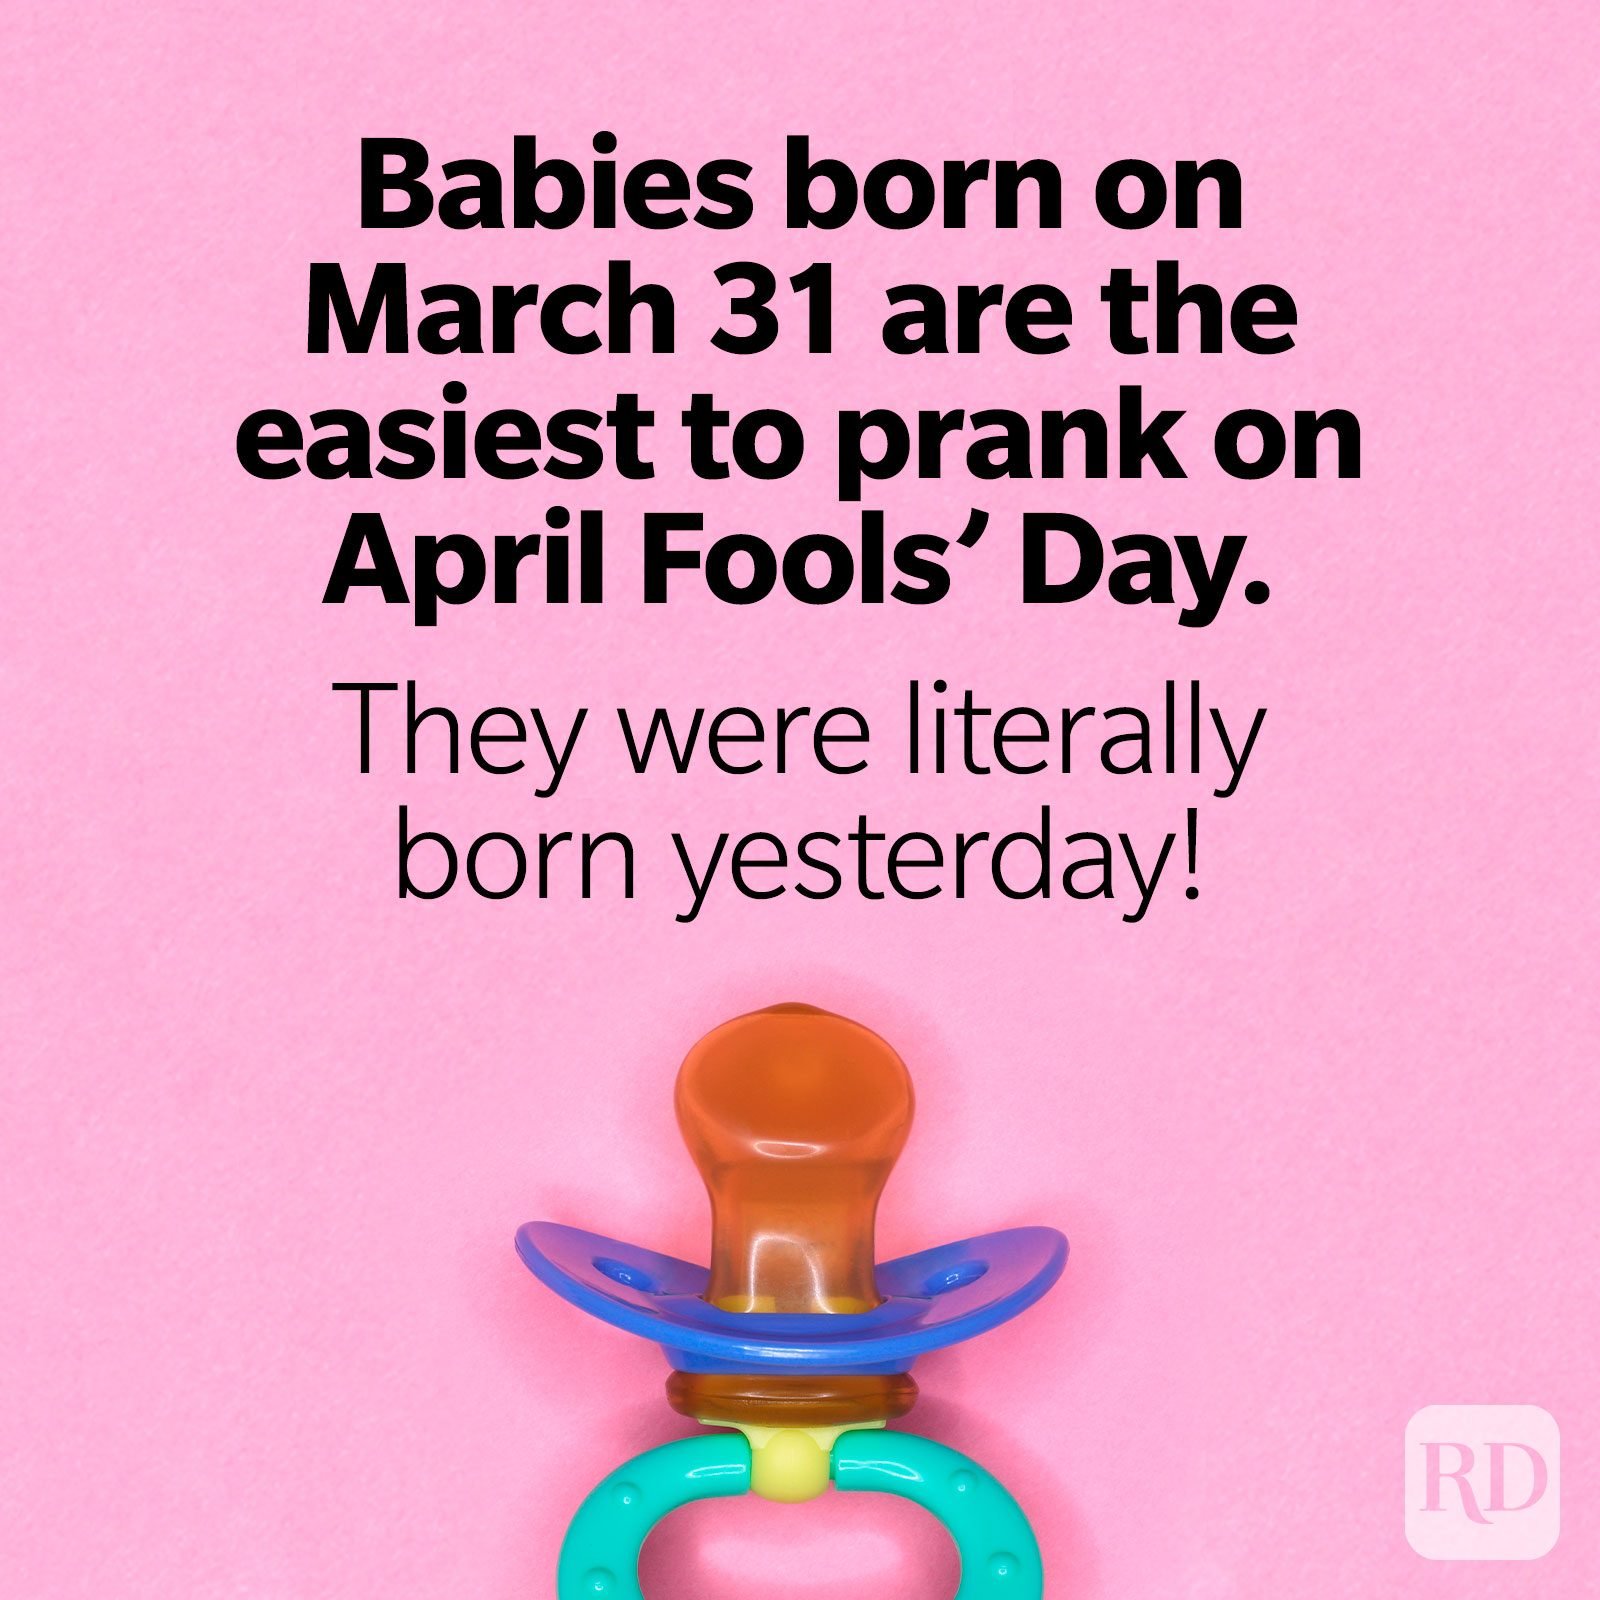 35 April Fools' Day Jokes to Make Everyone Laugh